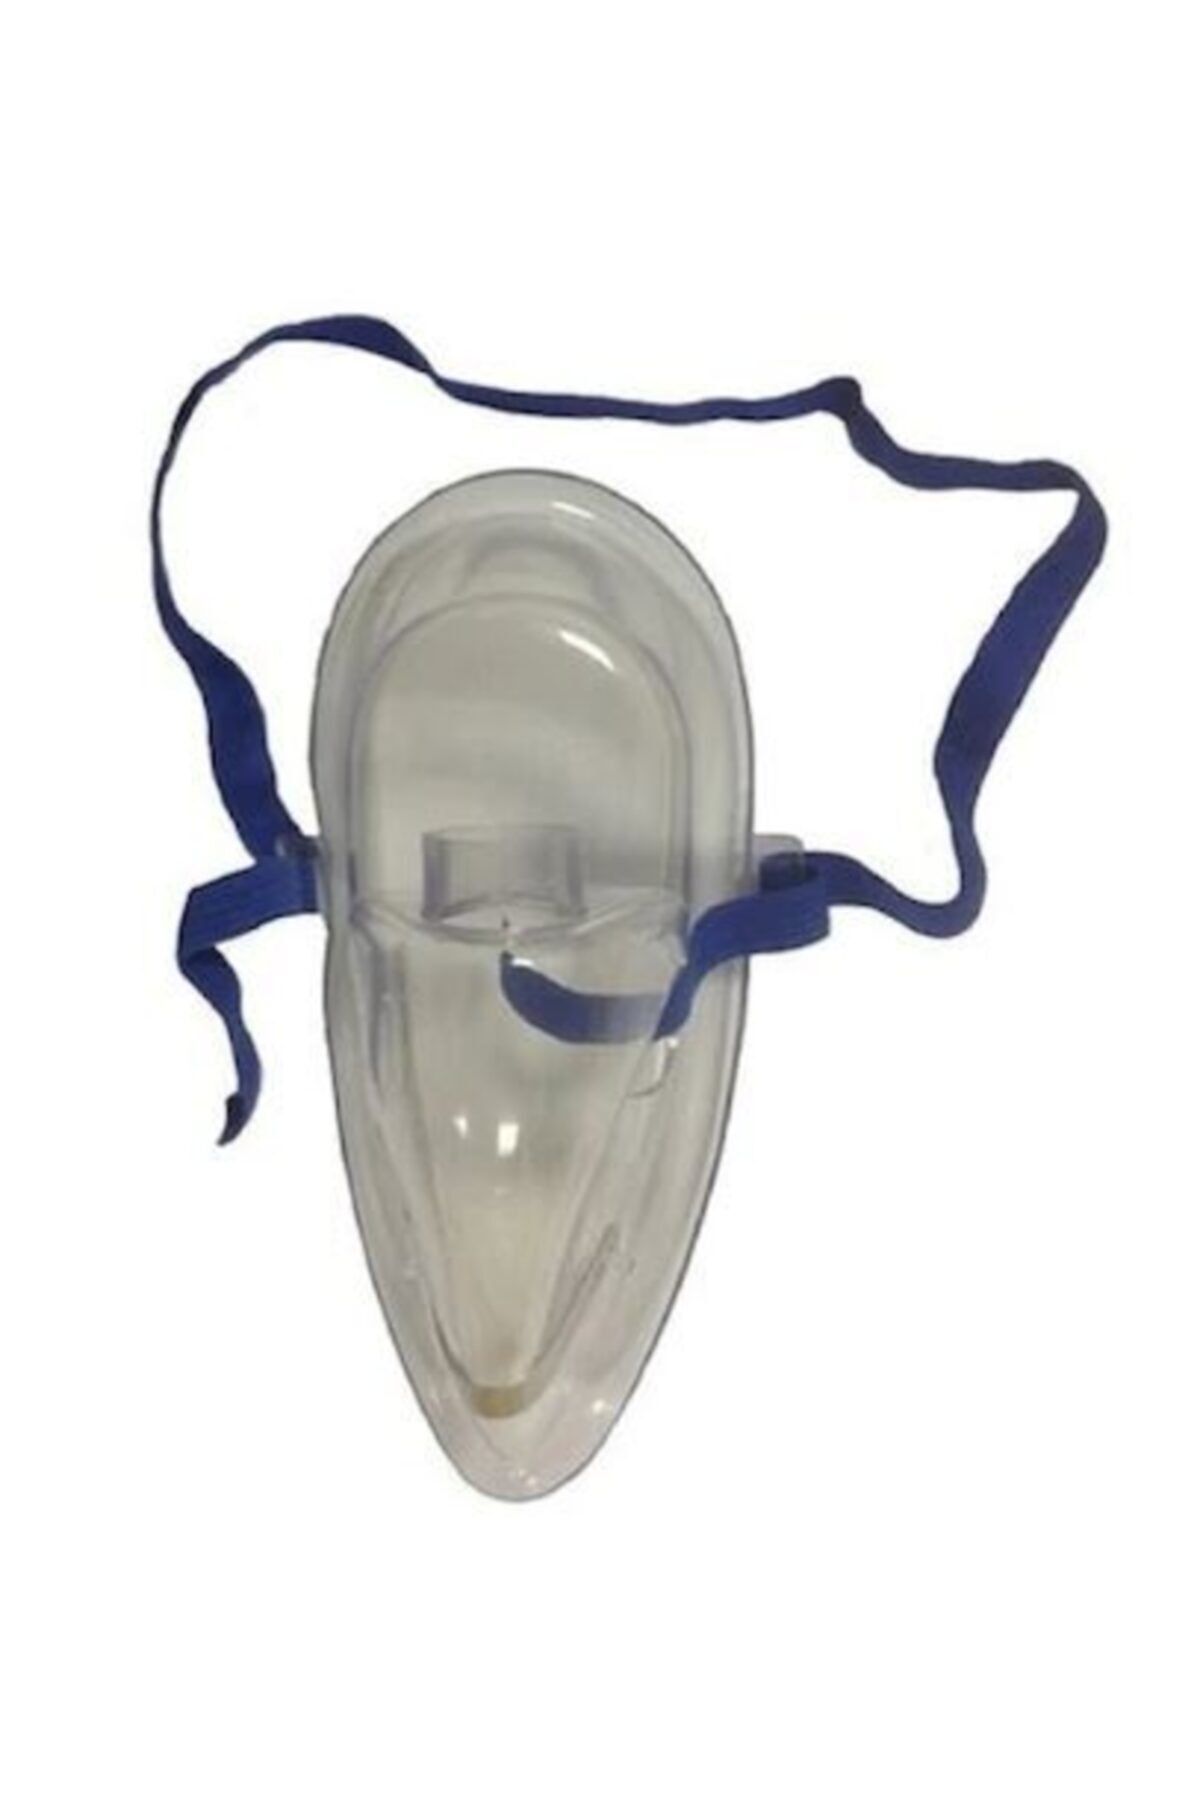 Omron Orijinal Nebul C28 Nebulizatör Yetişkin Maske